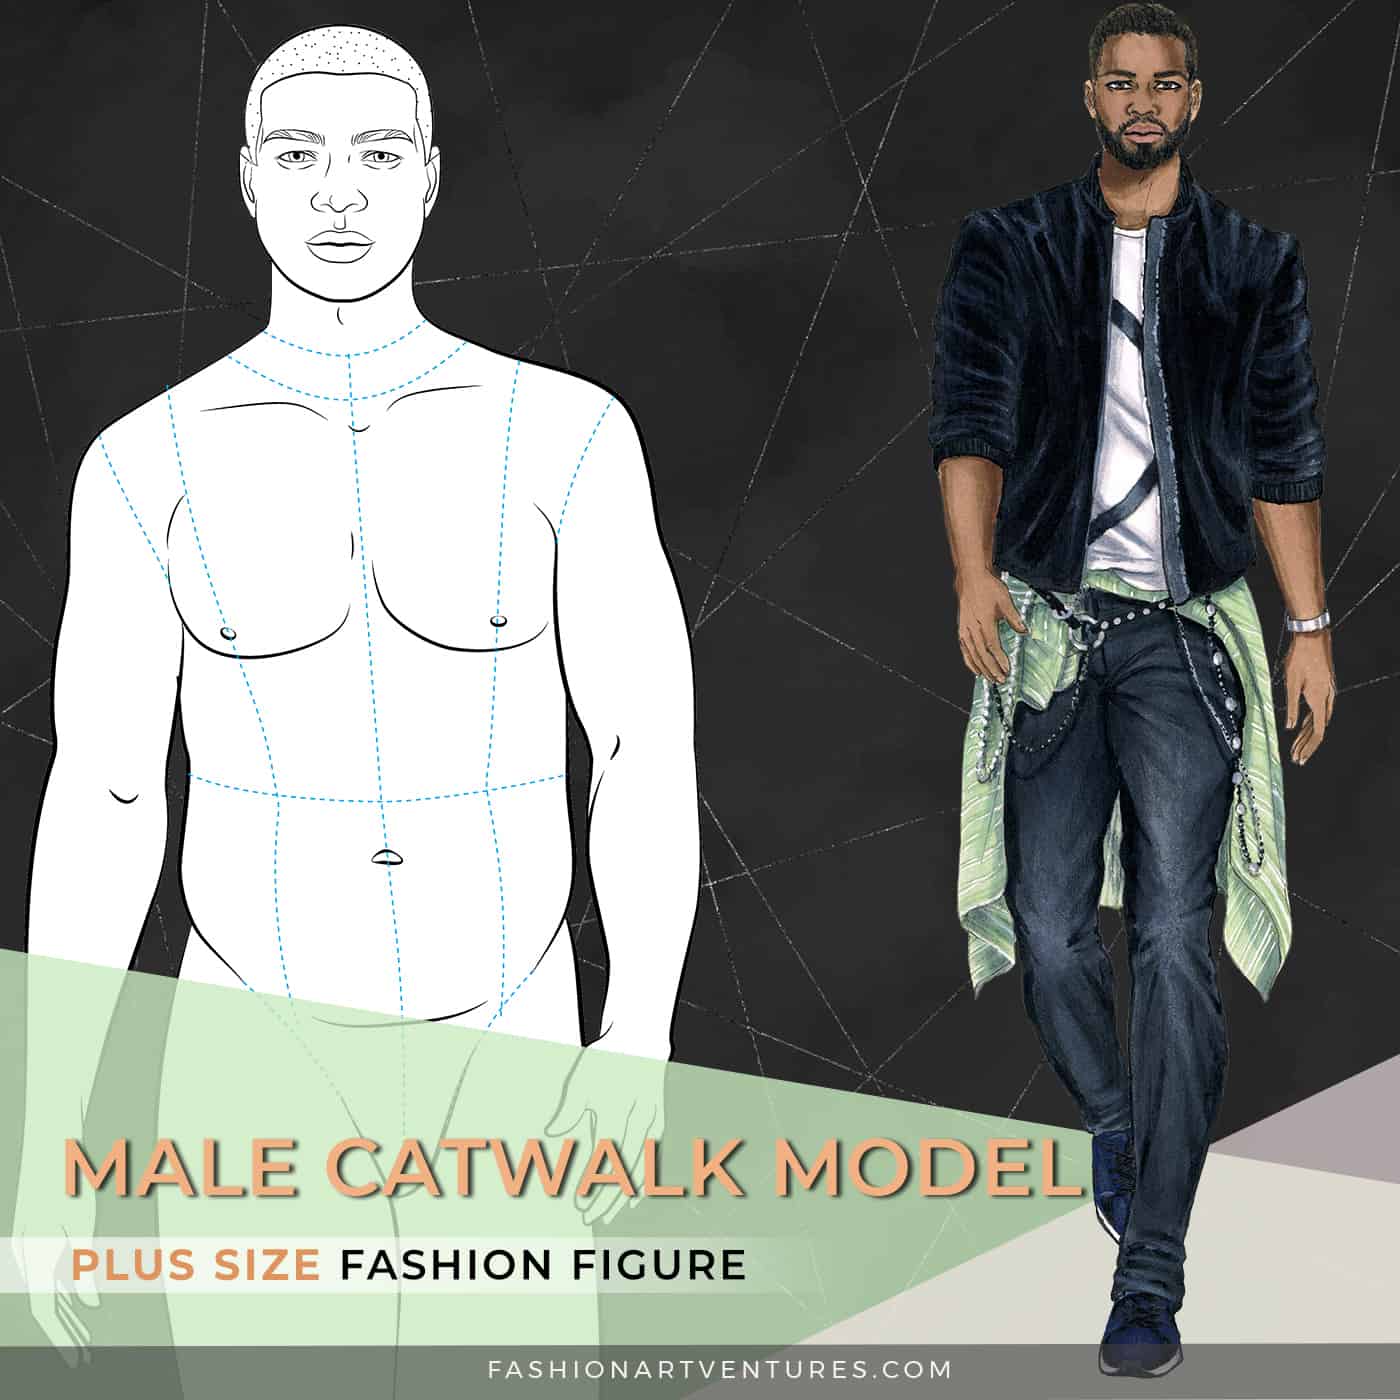 Male Catwalk Model Plus size blog cover